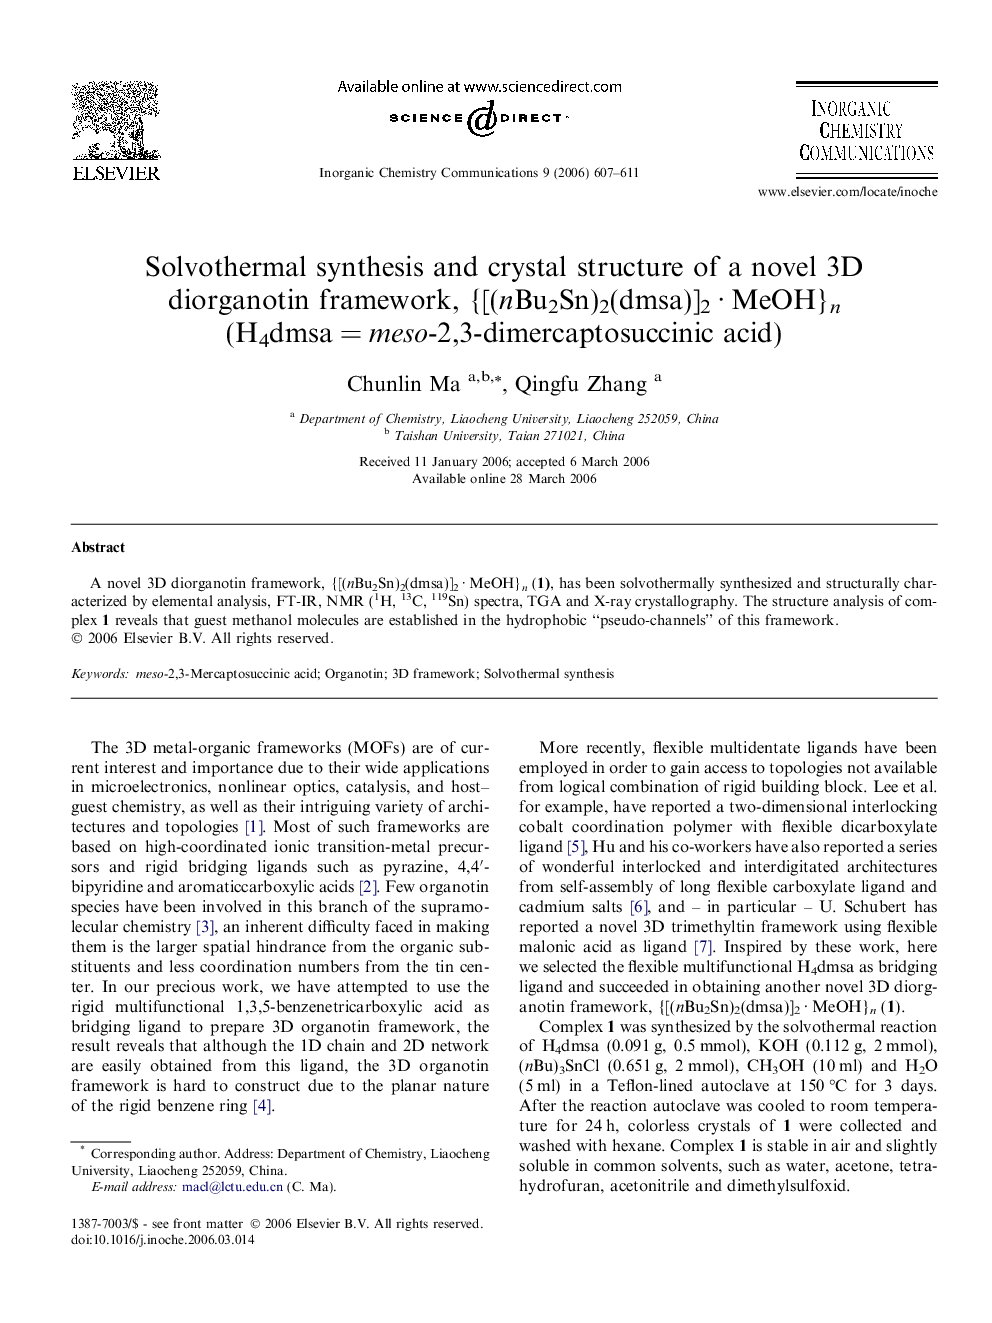 Solvothermal synthesis and crystal structure of a novel 3D diorganotin framework, {[(nBu2Sn)2(dmsa)]2 · MeOH}n (H4dmsa = meso-2,3-dimercaptosuccinic acid)